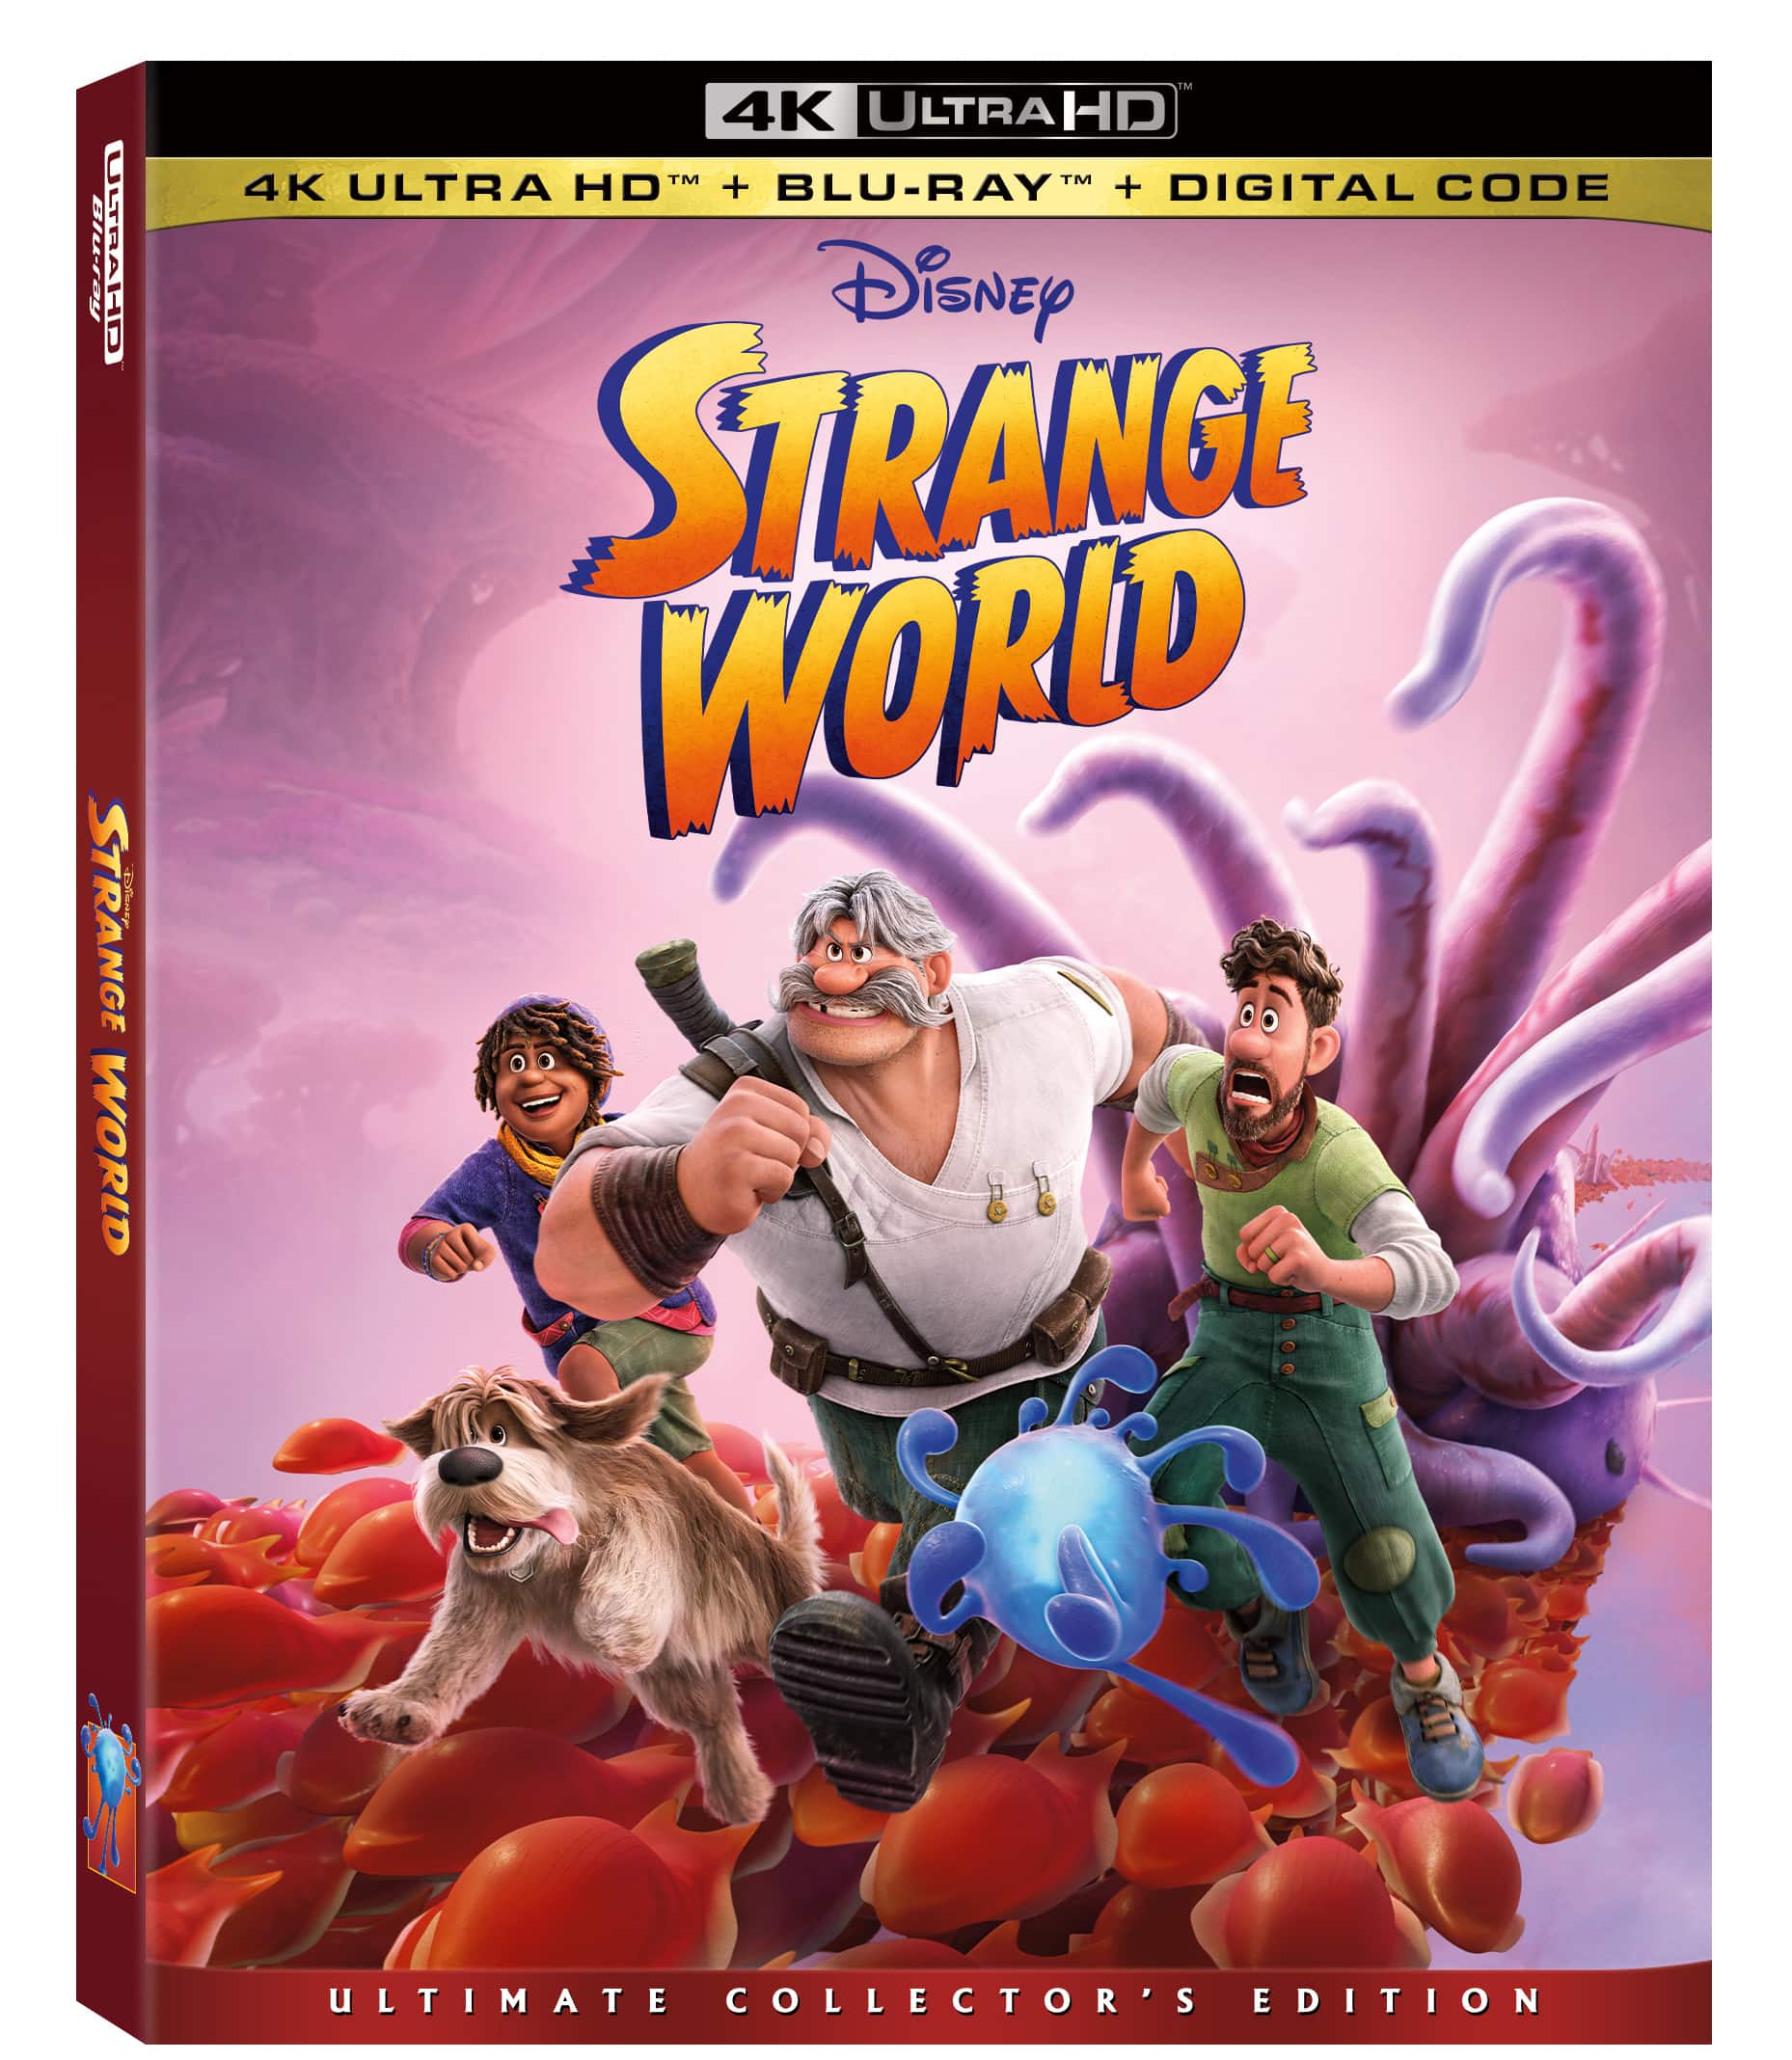 Strange World release date